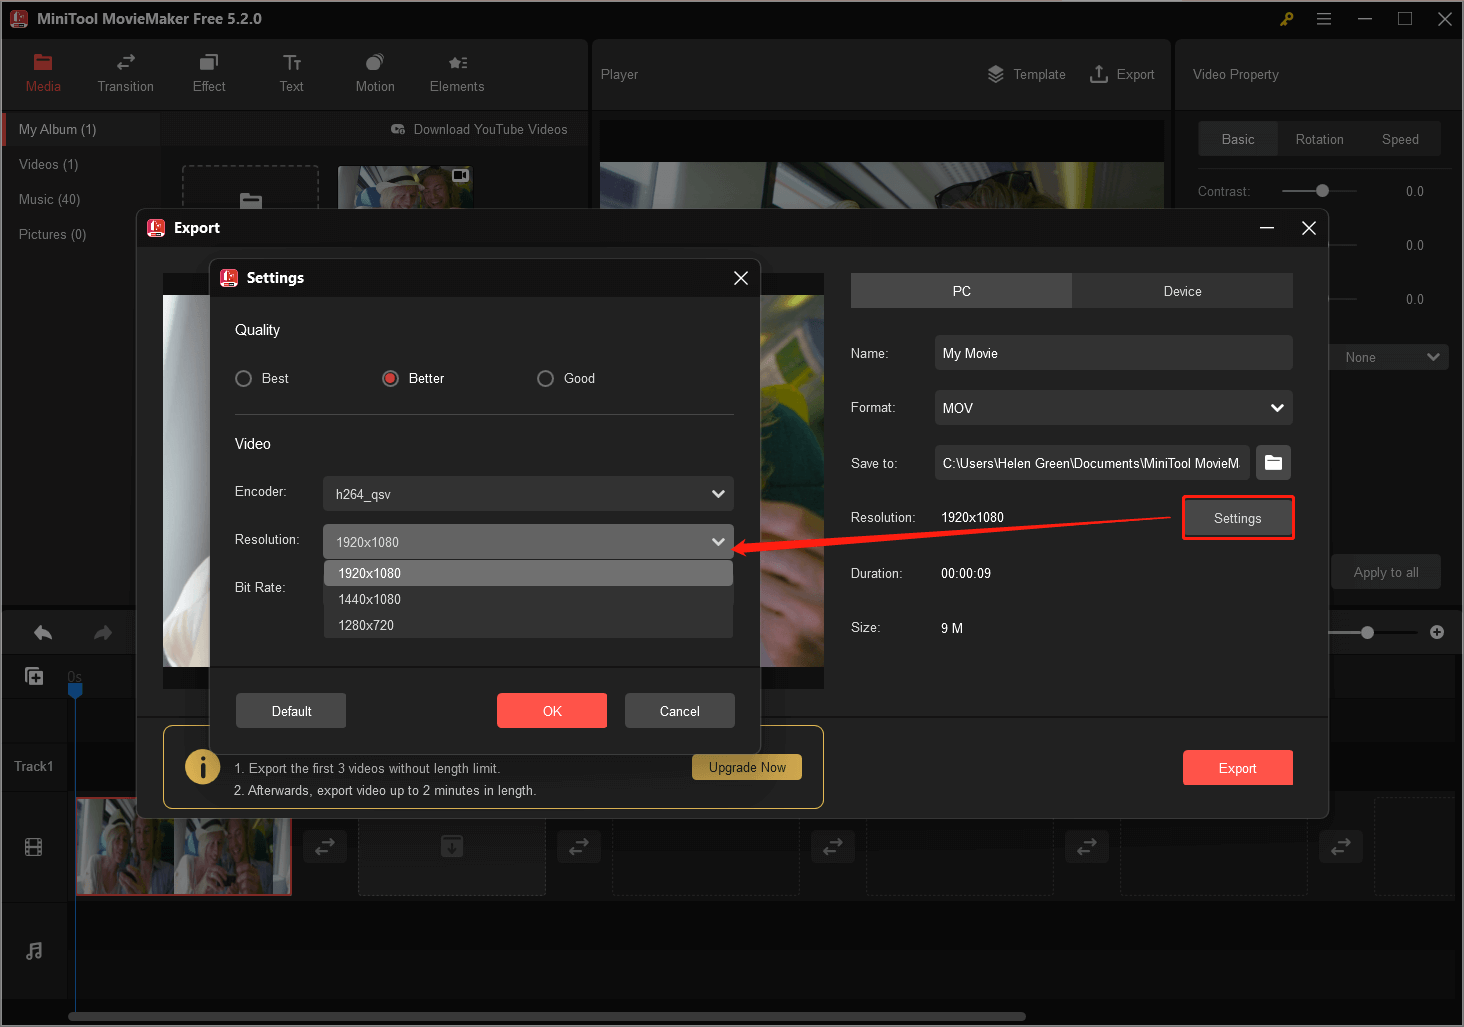 MiniTool MovieMaker change video resolution free